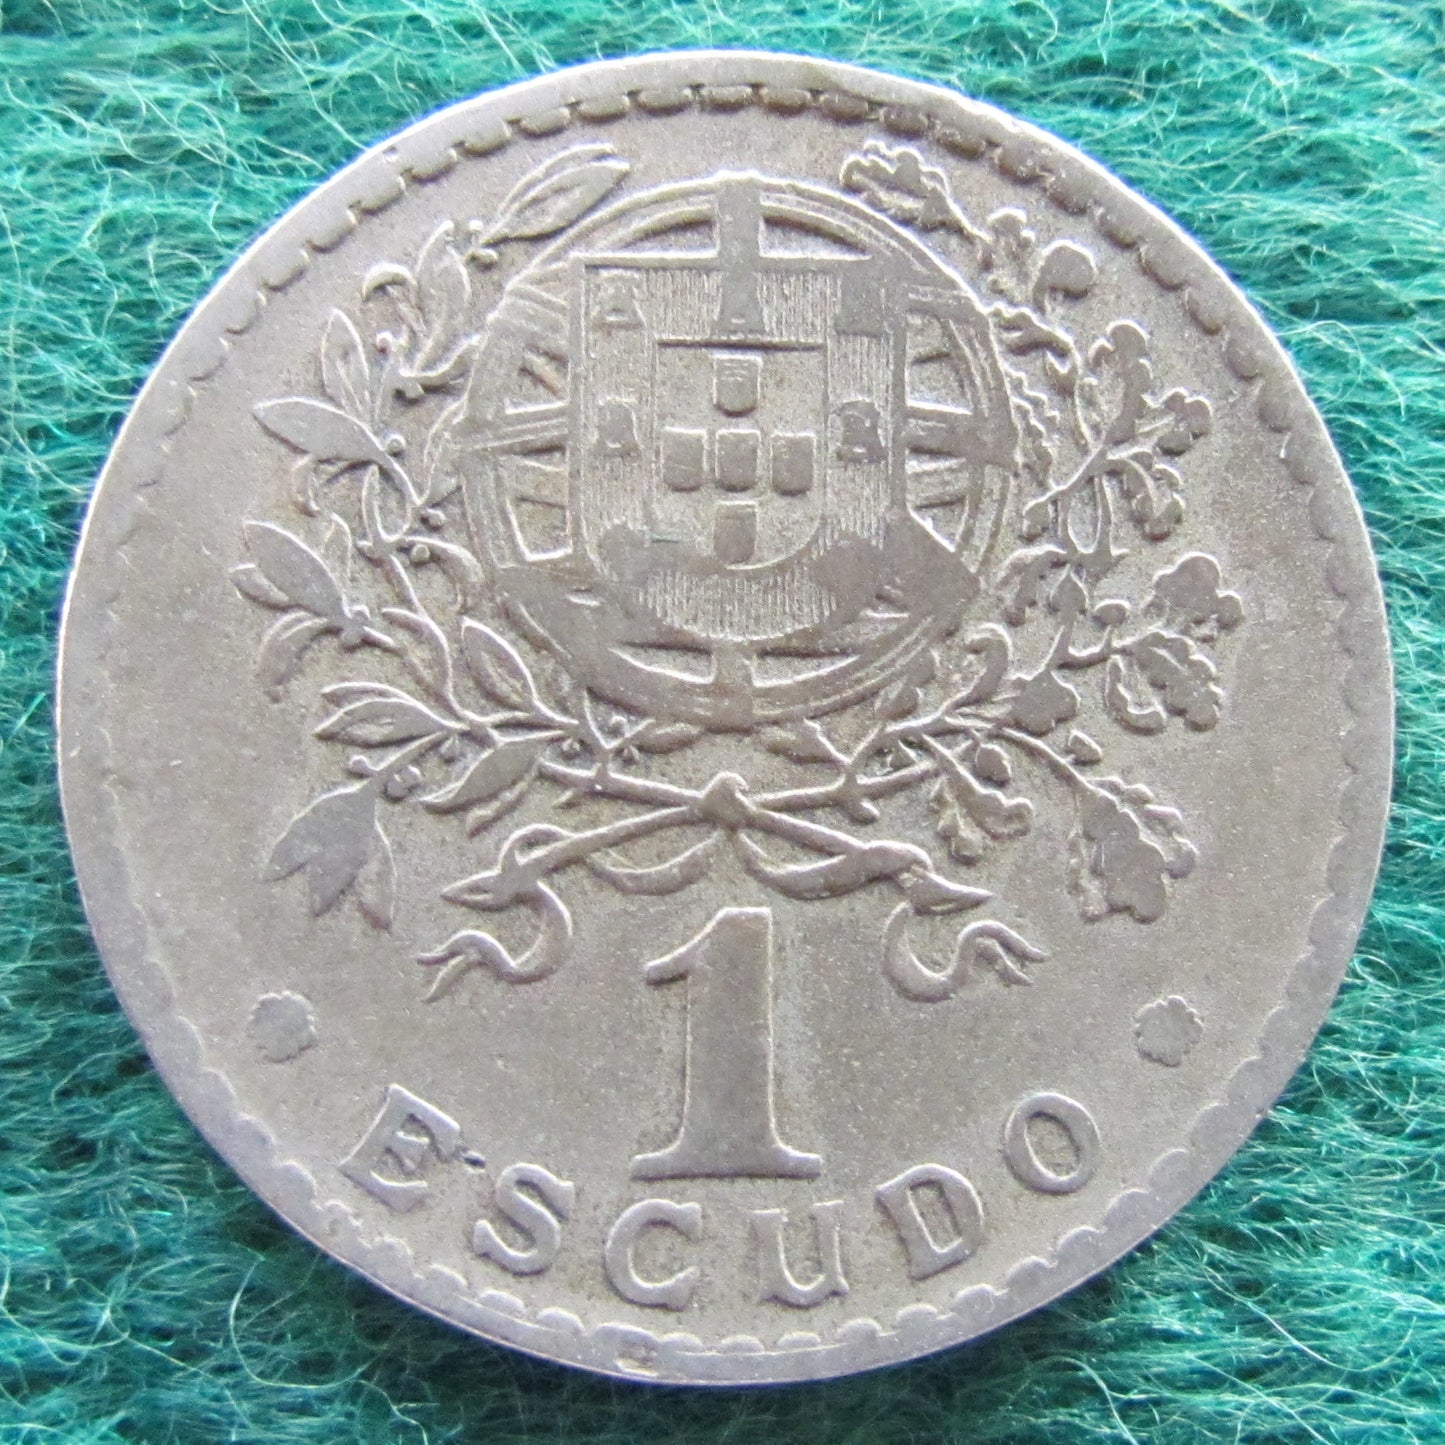 Portugal 1928 1 Escudo Coin - Circulated